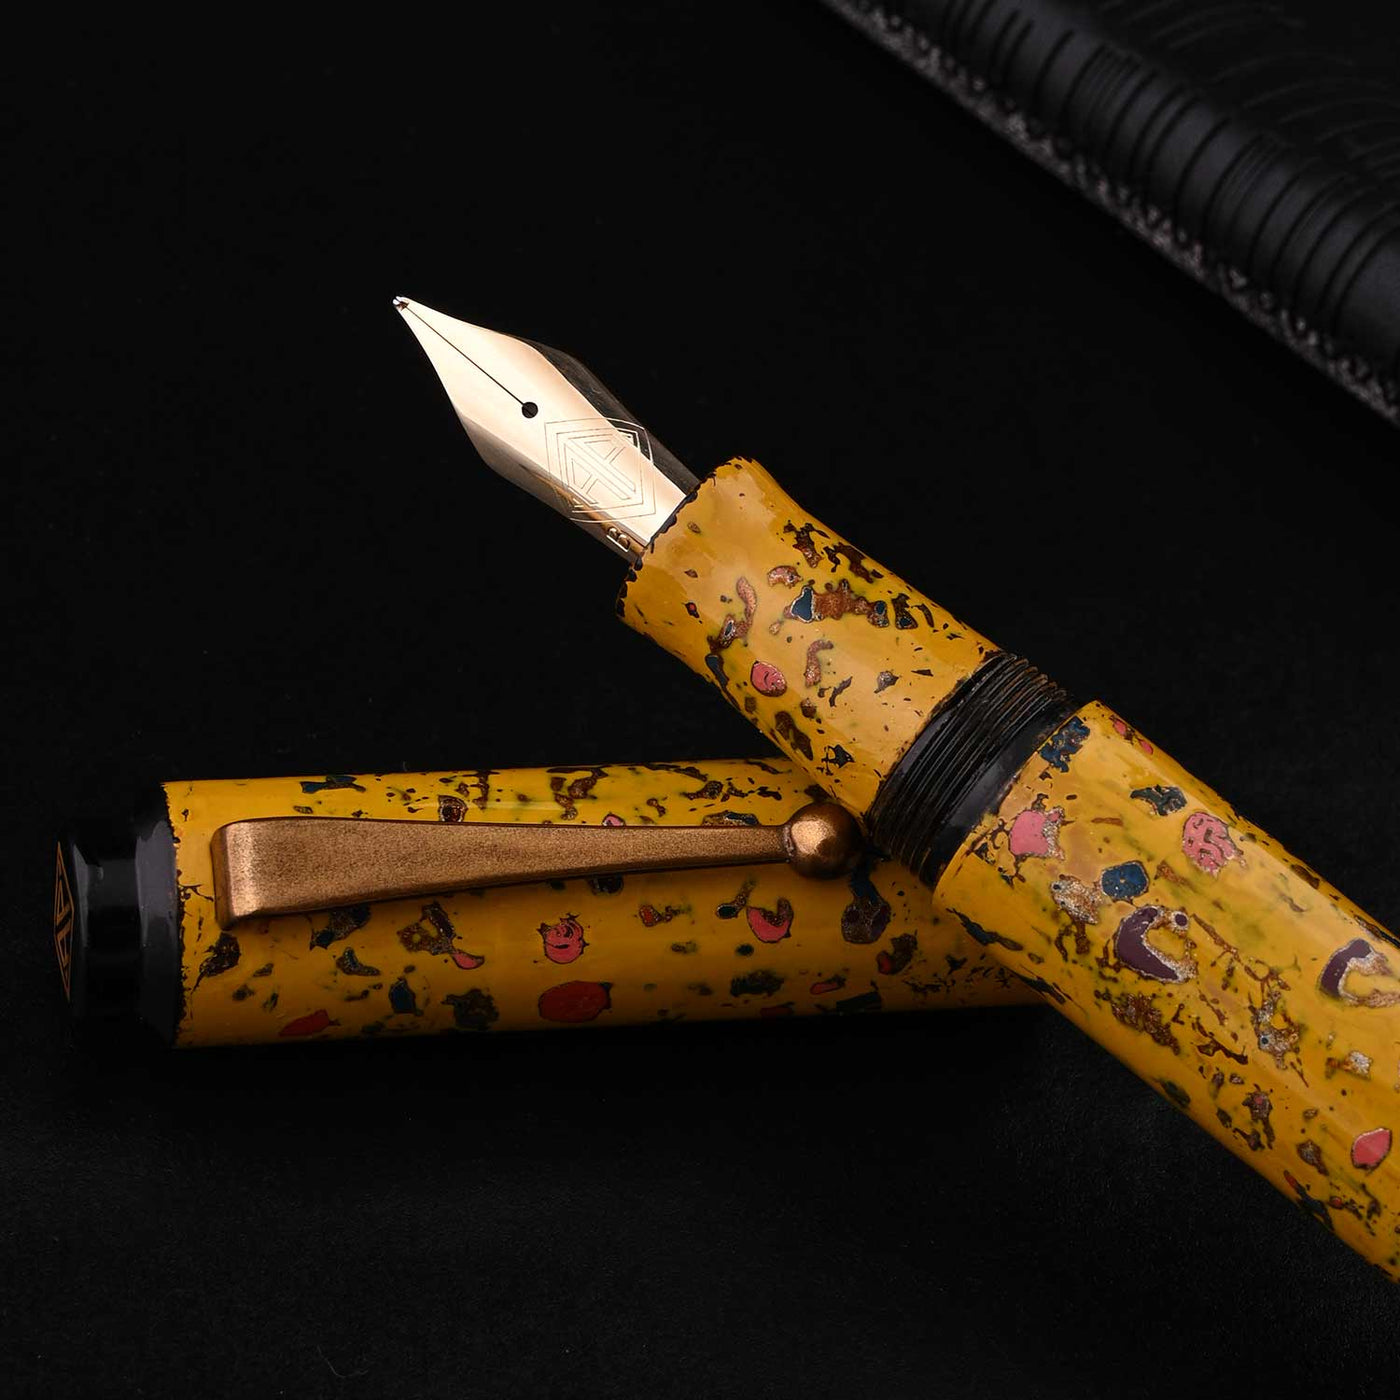 AP Magical Nuri Limited Edition Fountain Pen Yellow 18K Gold Nib 2